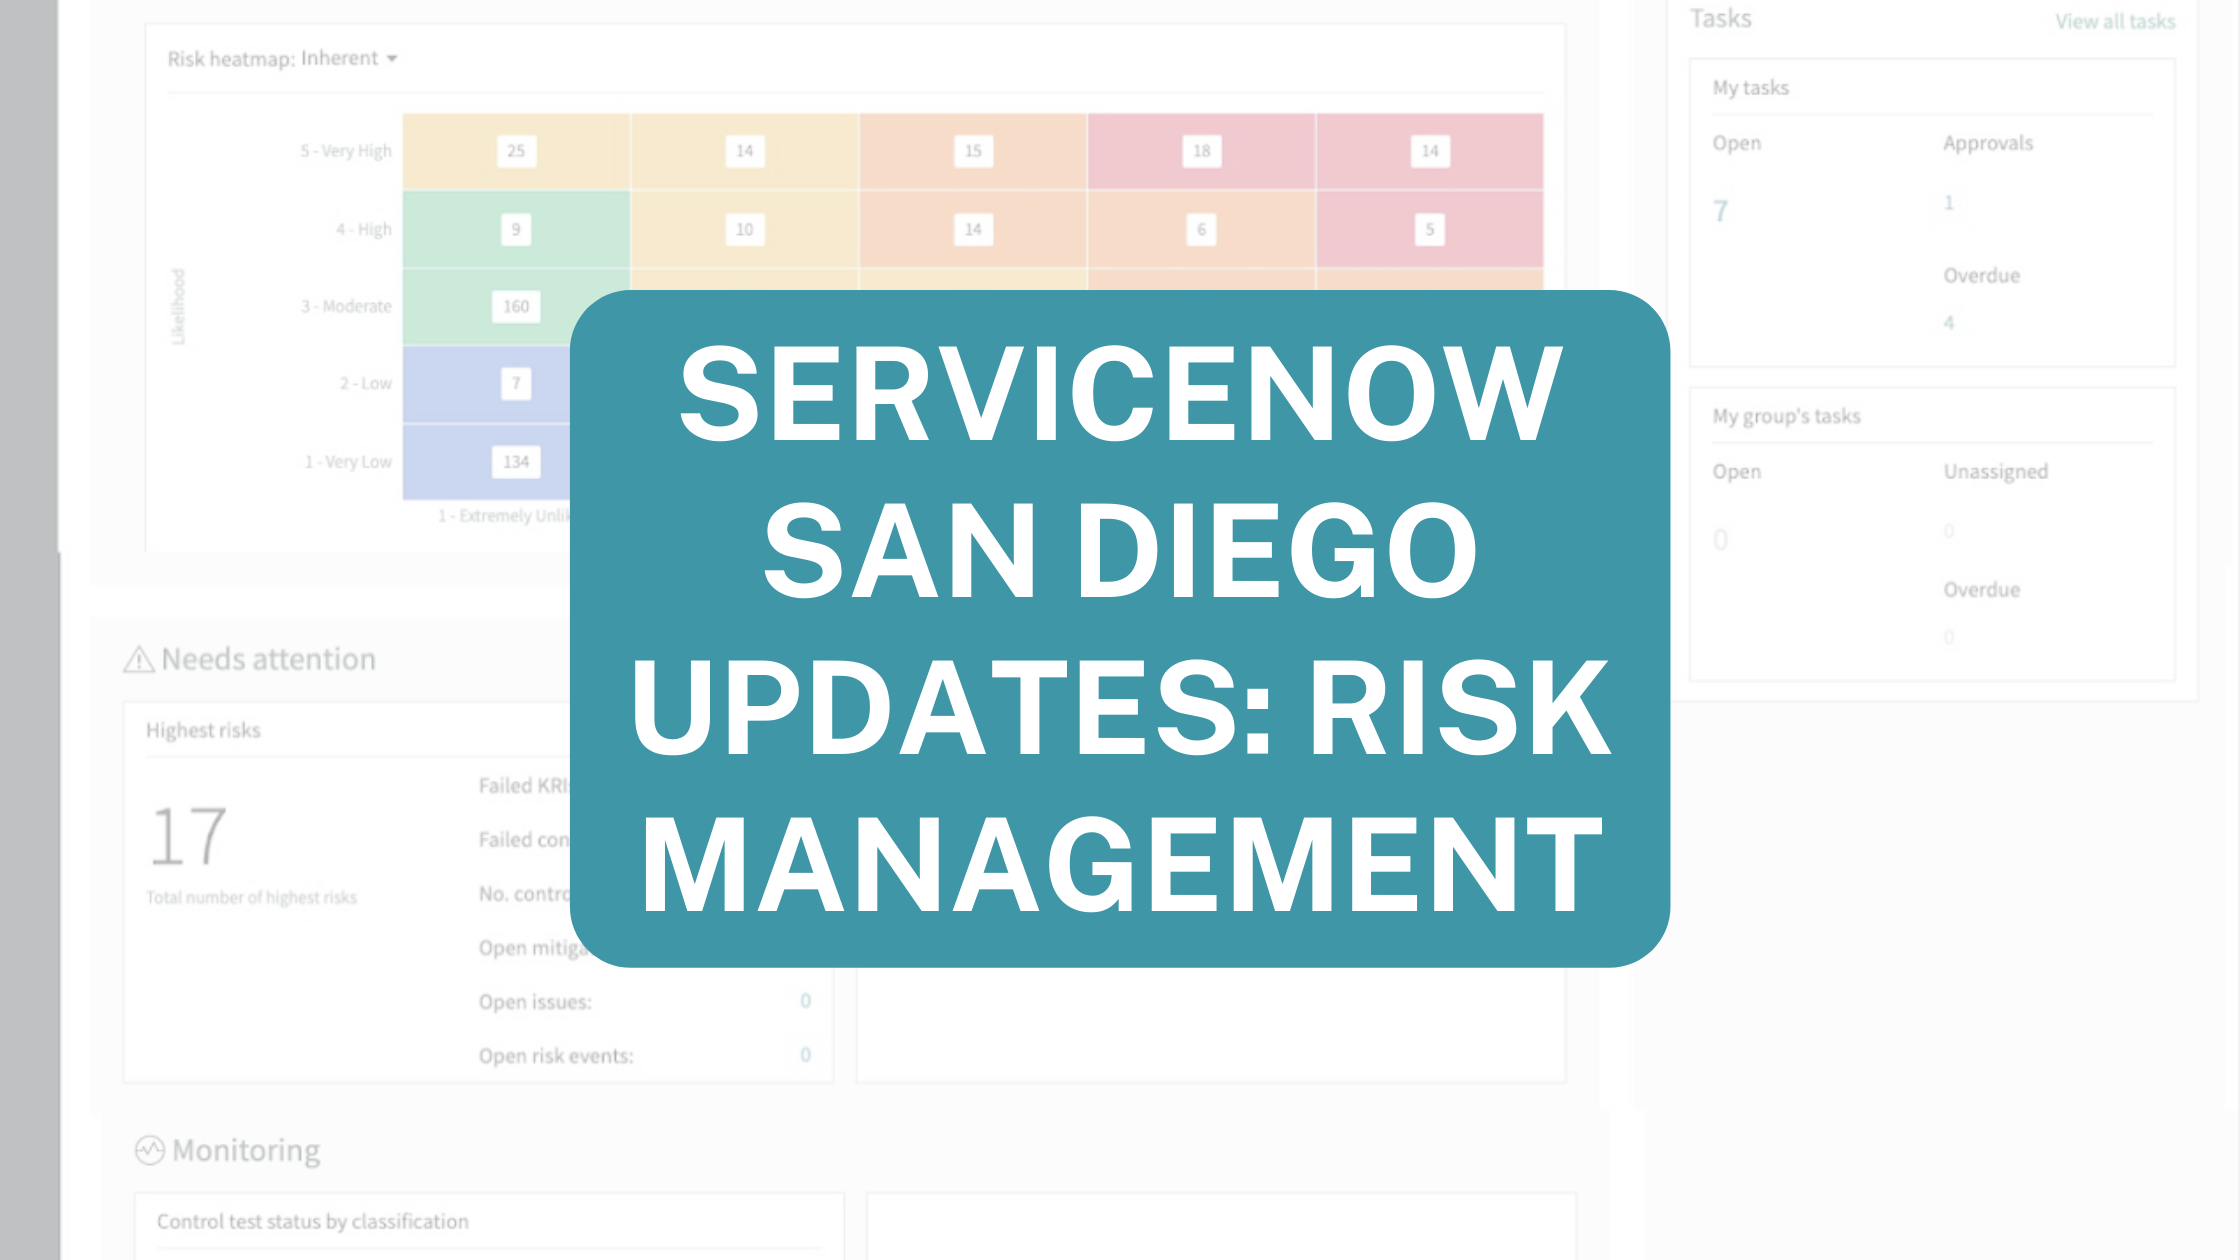 Key ServiceNow San Diego Updates For Risk Management Professionals